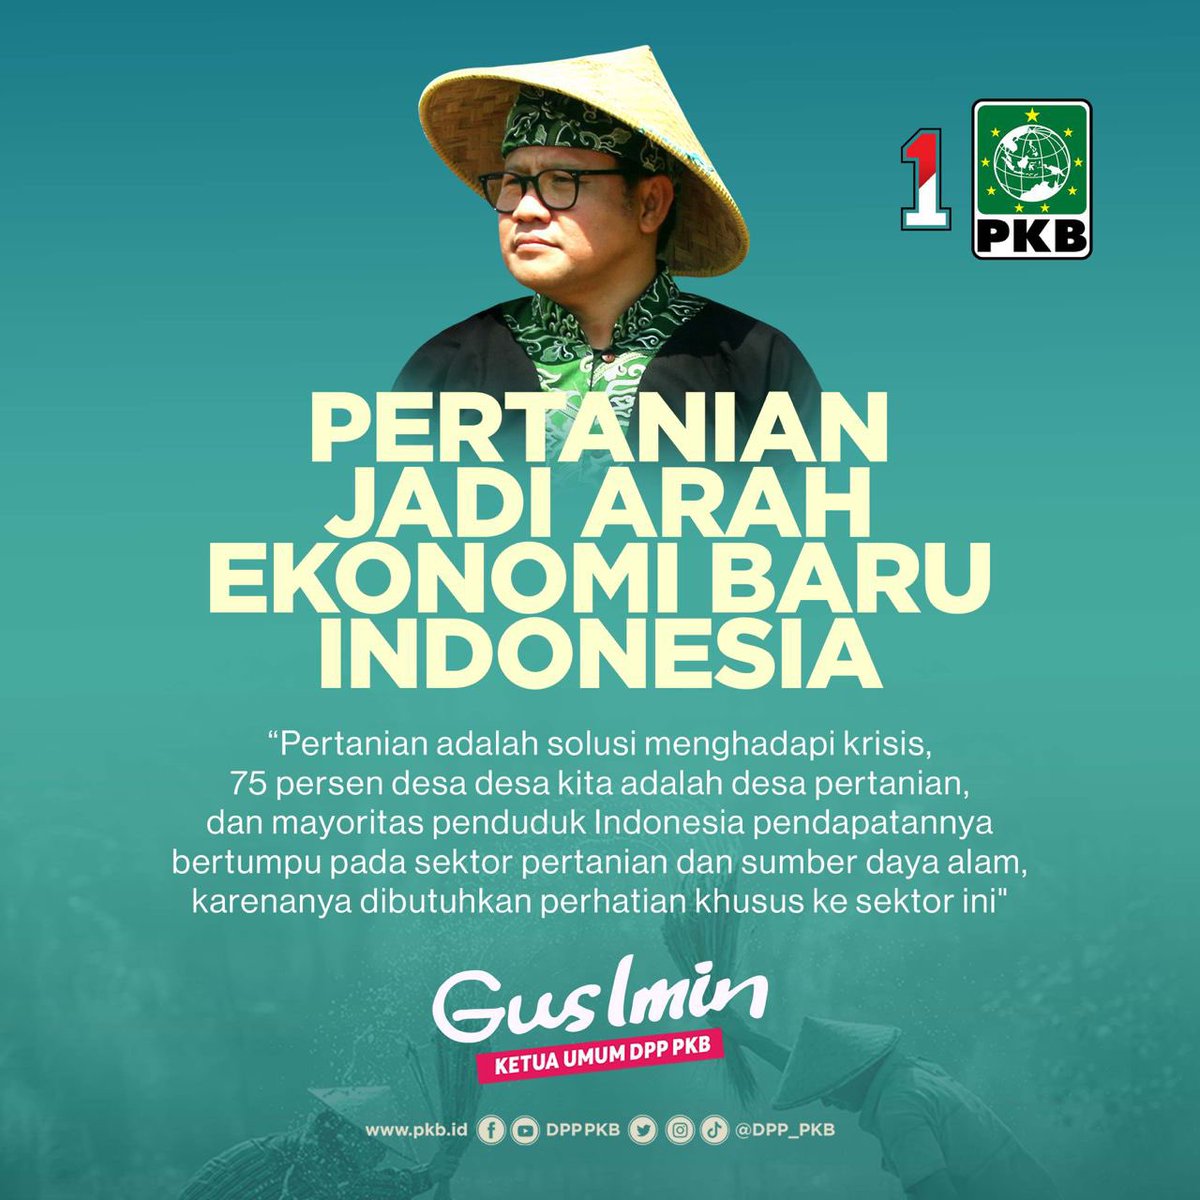 Perlu perhatian khusus pada sektor pertanian mengingat 75 persen desa di Indonesia adalah desa pertanian @cakimiNOW 

#GusMuhaimin
#PKBbelaPetani